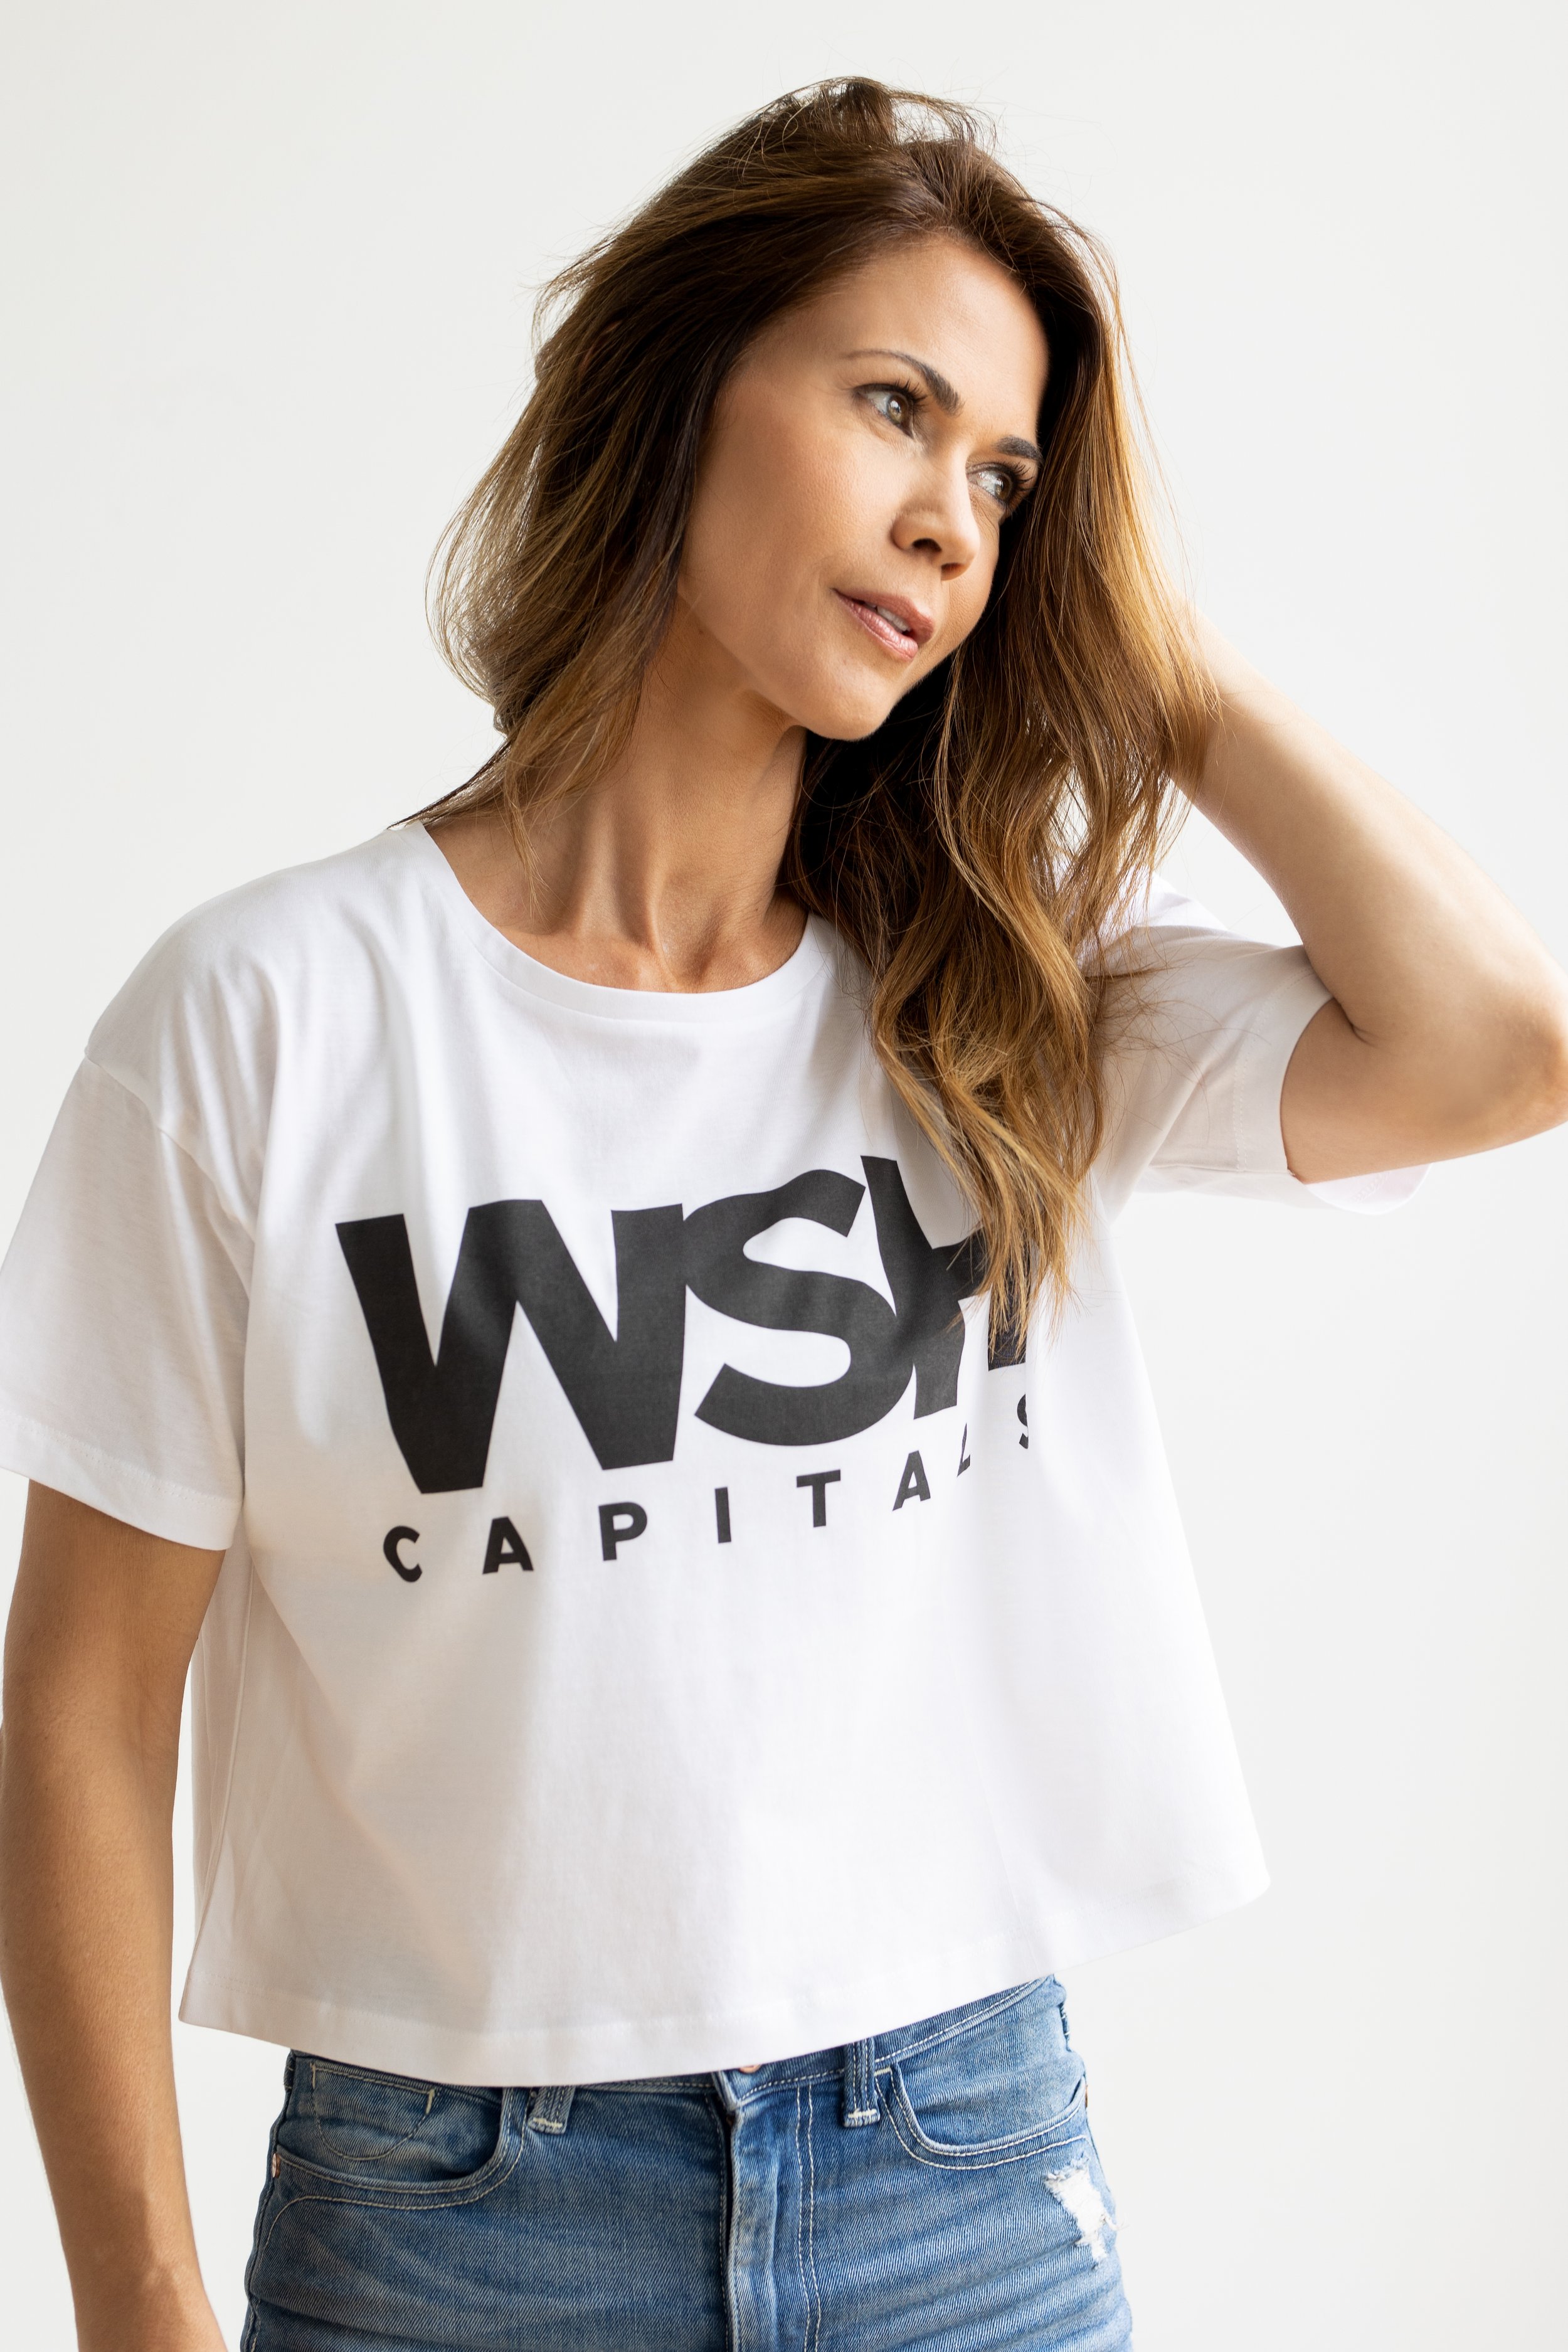 Washington Capitals Women's Apparel